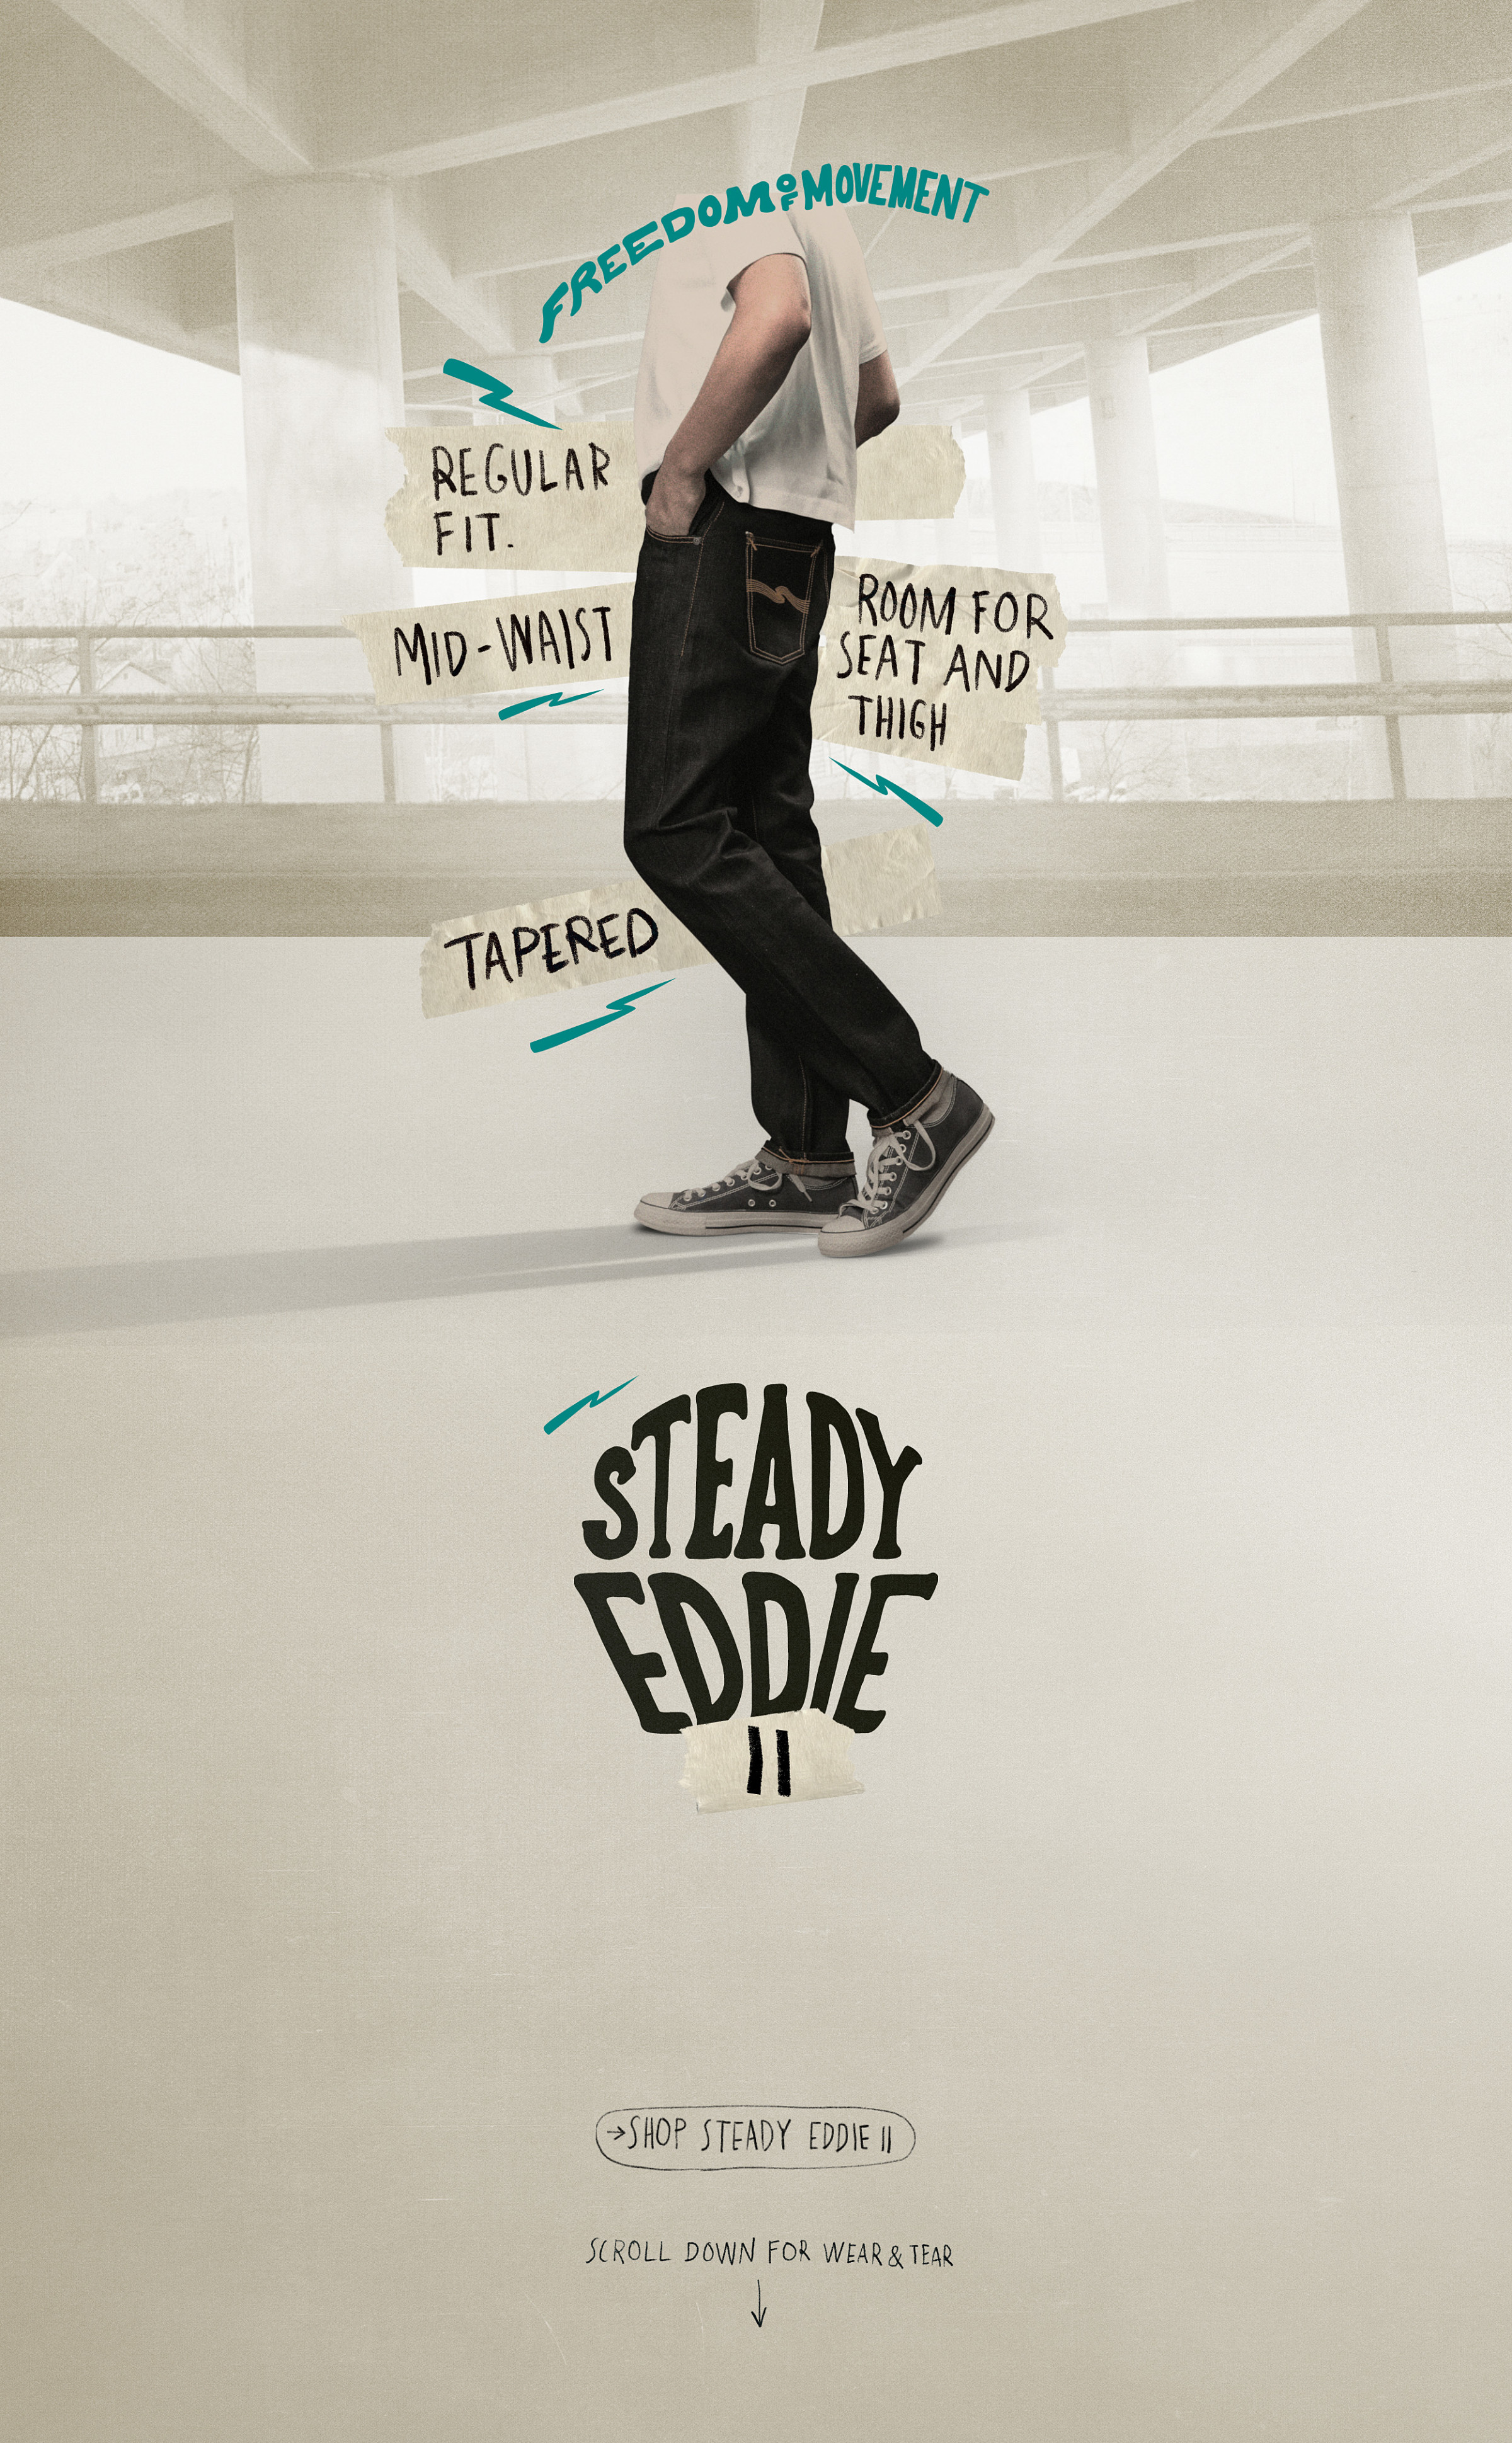 Steady Eddie II Freedom of Movement